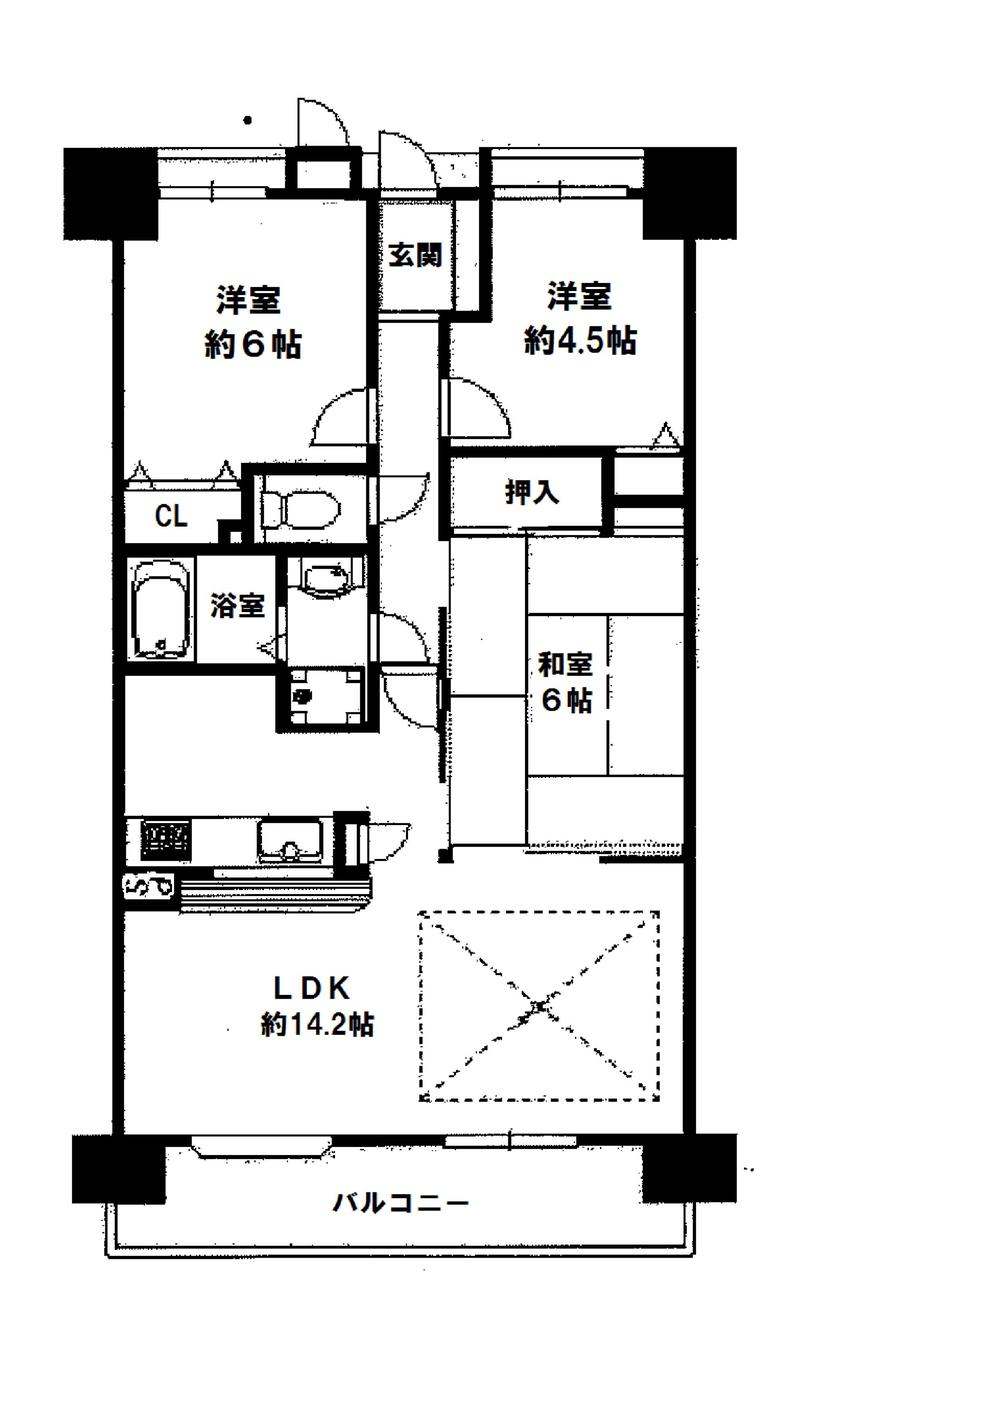 Floor plan. 3LDK, Price 11.8 million yen, Footprint 65 sq m , Balcony area 11.7 sq m